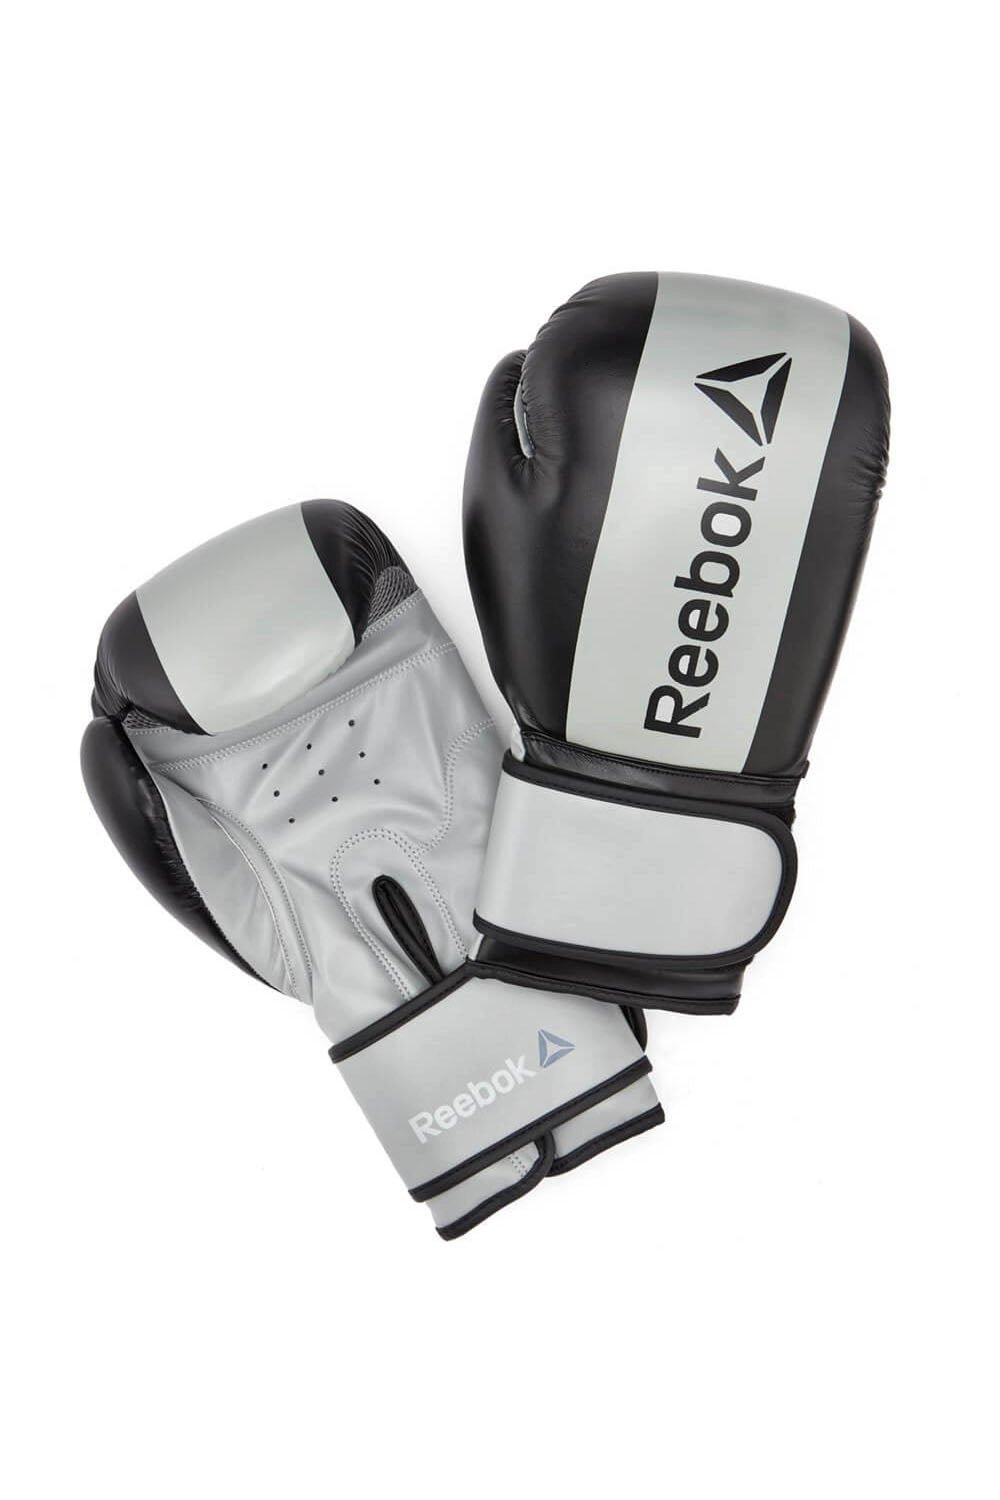 Reebok Boxing Gloves - Grey|Size: 10oz|grey